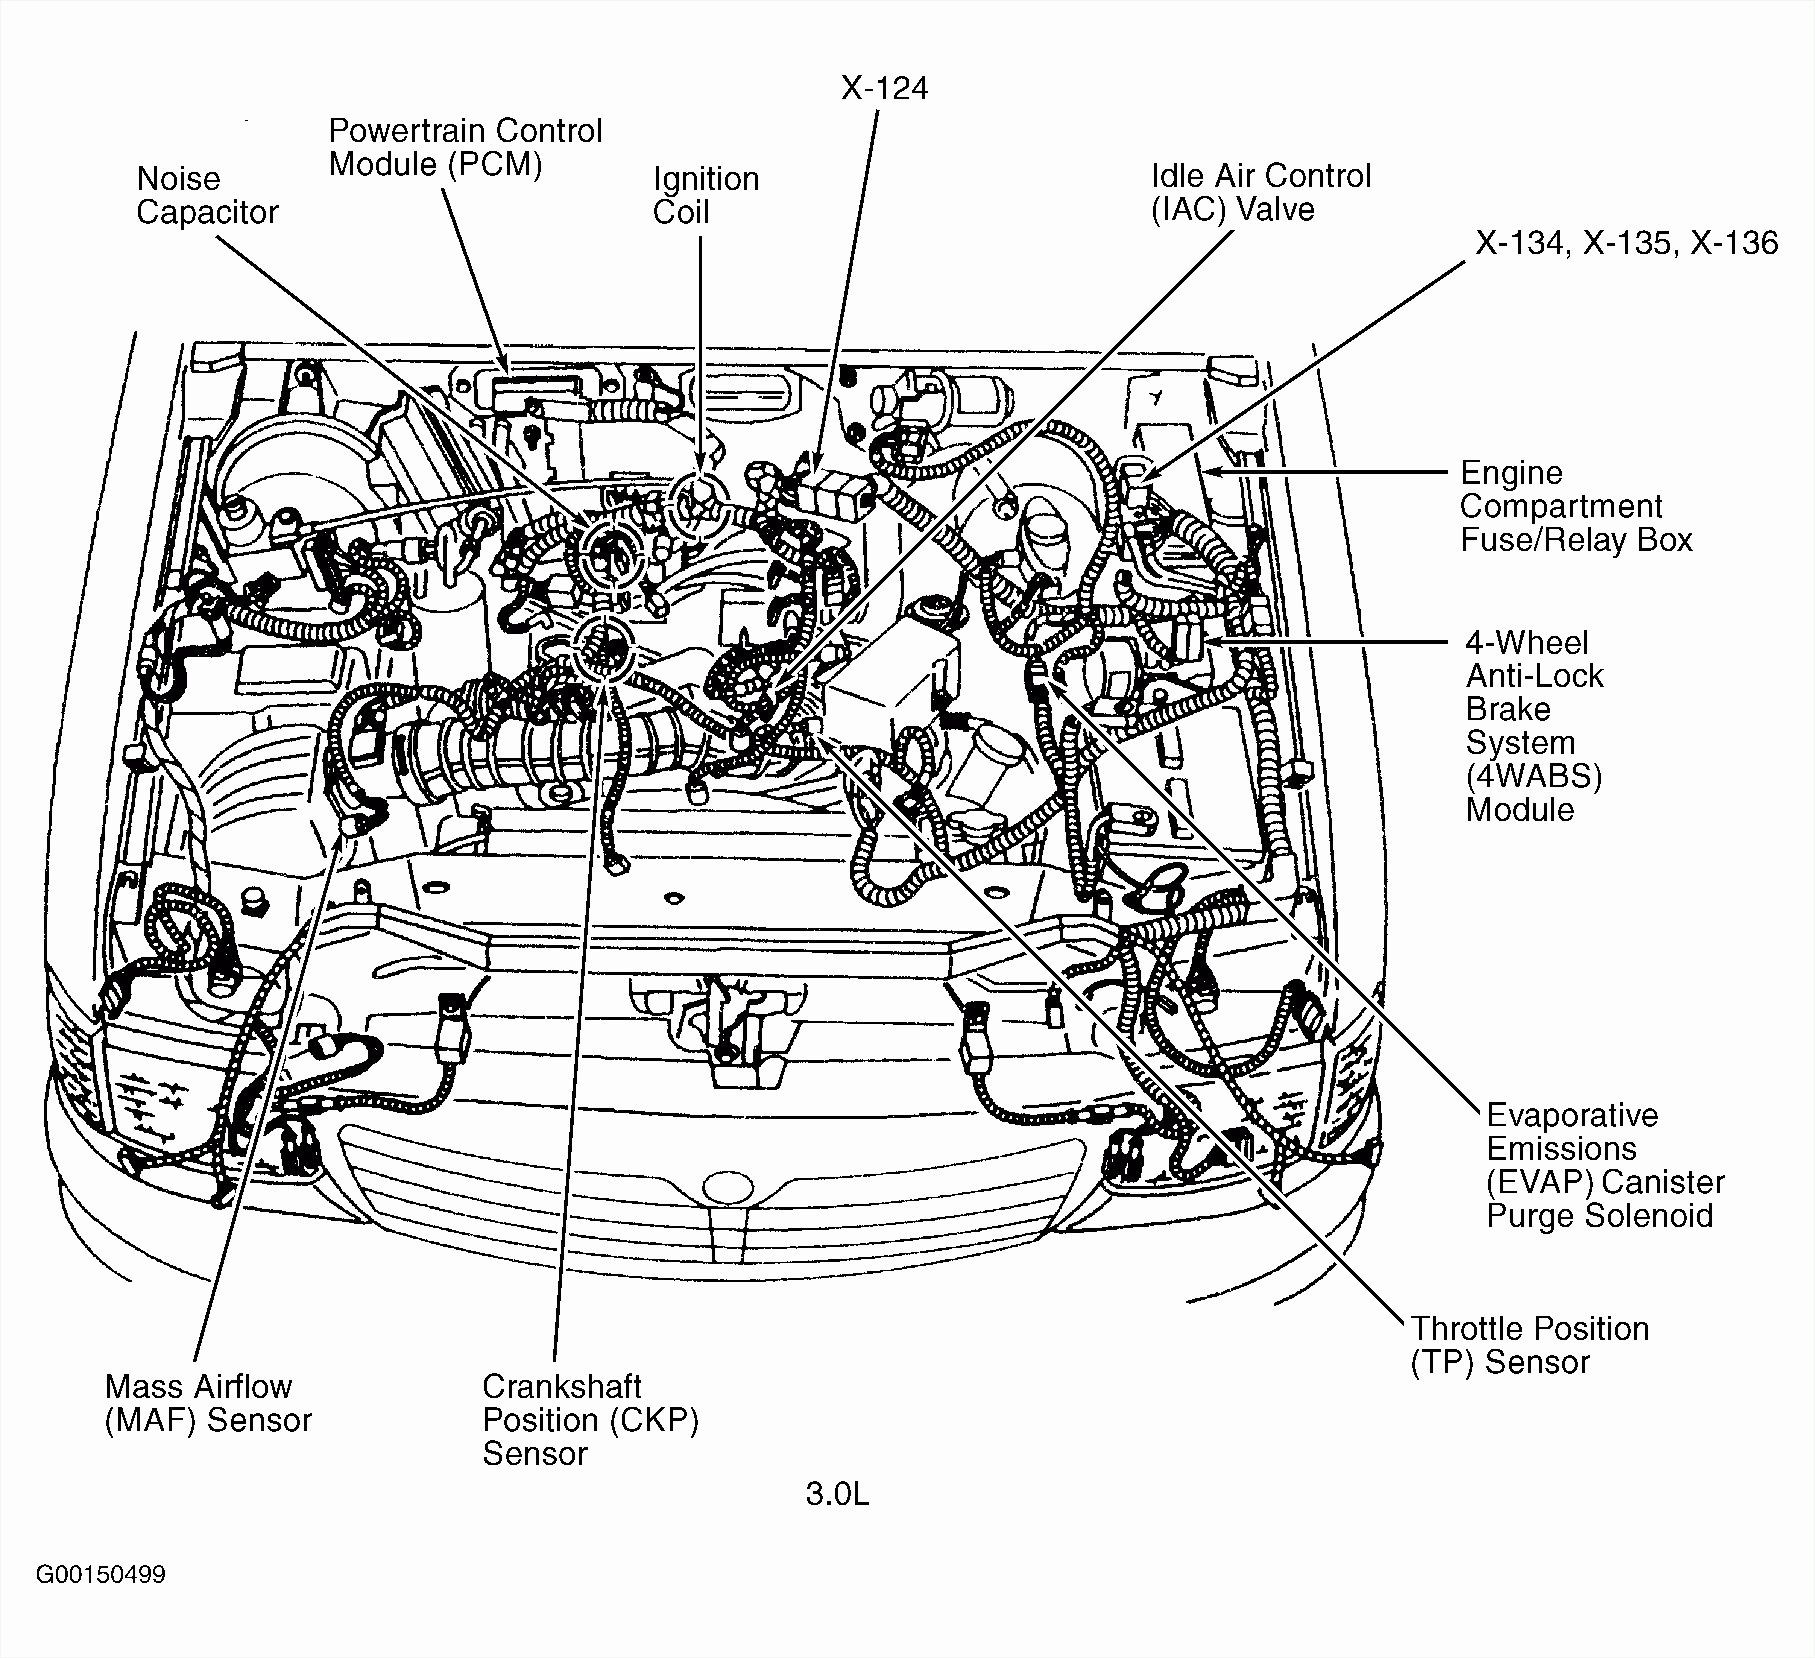 1995 Jeep Cherokee Engine Diagram 1997 Jeep Cherokee Engine Diagram Wiring Diagram Paper Of 1995 Jeep Cherokee Engine Diagram